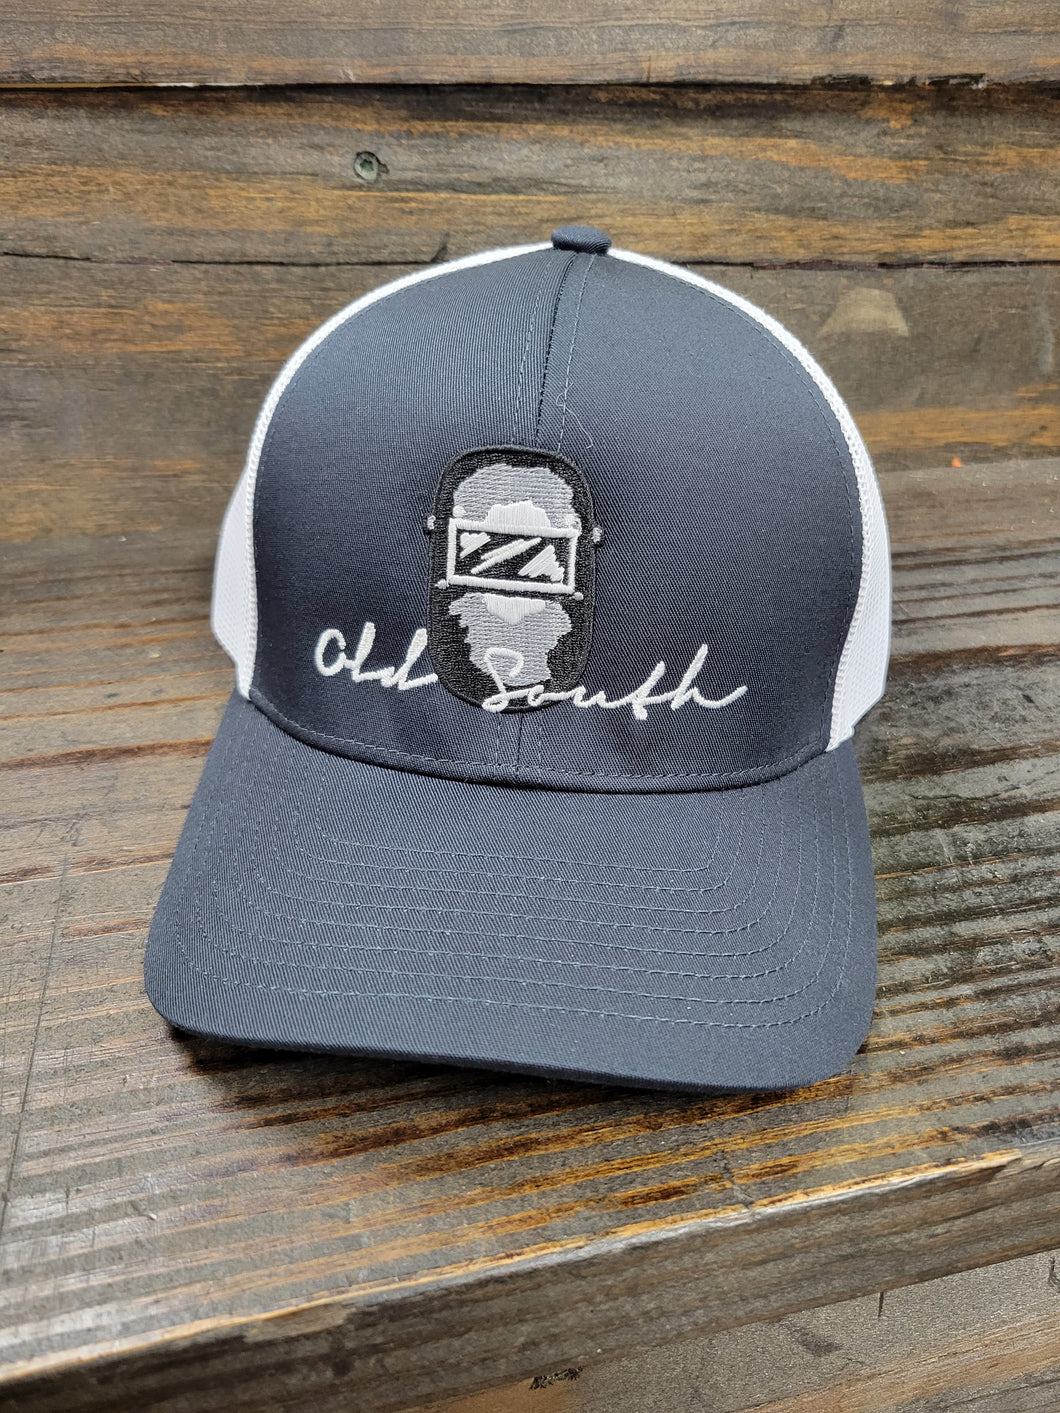 Old South Welder Trucker Hat